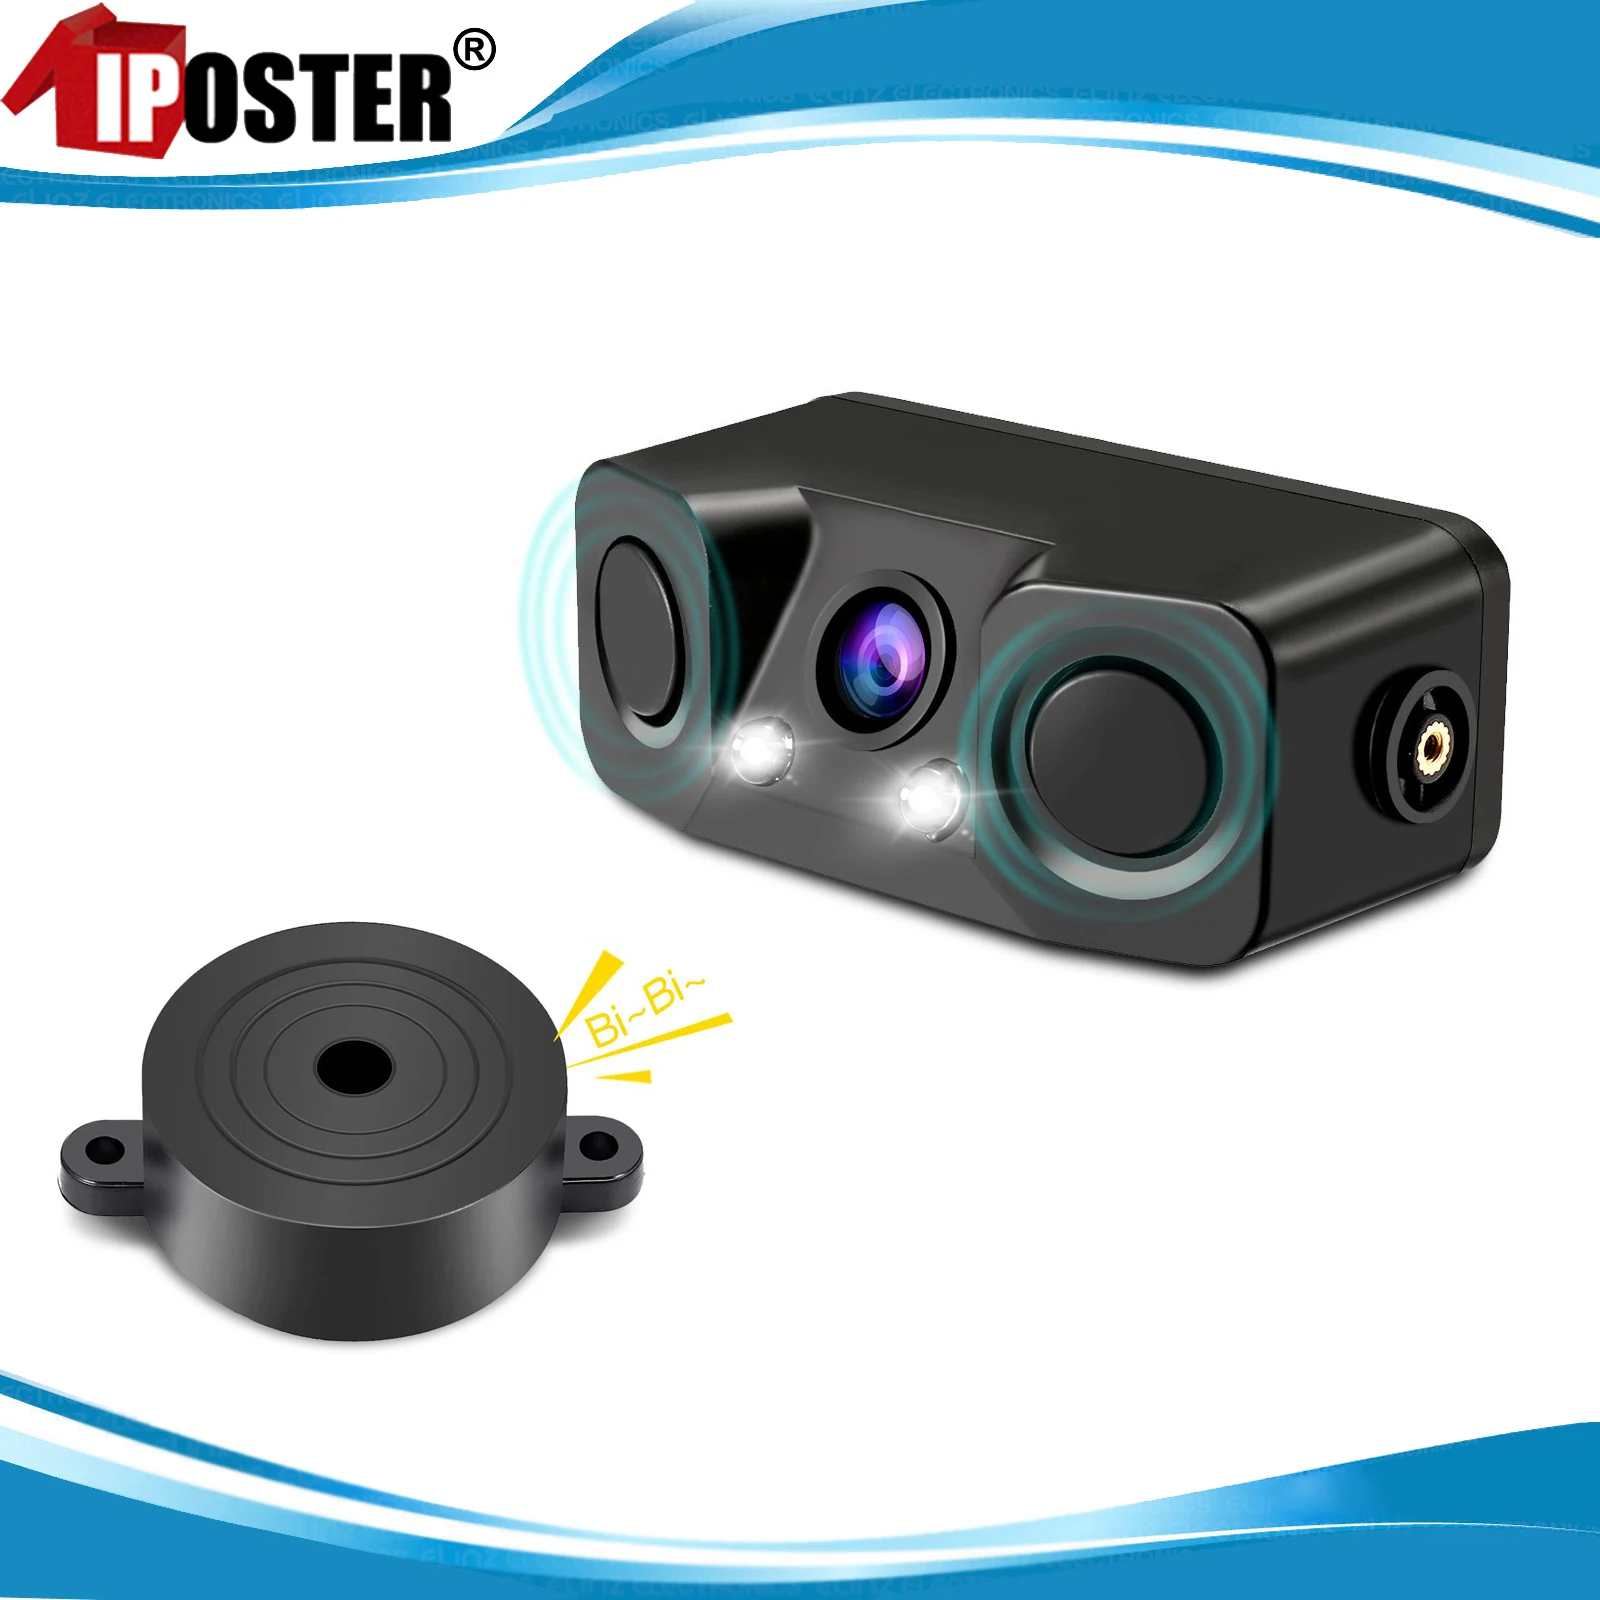 

iPoster HD CCD Car Rear View Camera 3 in 1 Parking Radar Detector Sensor Night Vision Waterproof 12v For Car SUV Rv